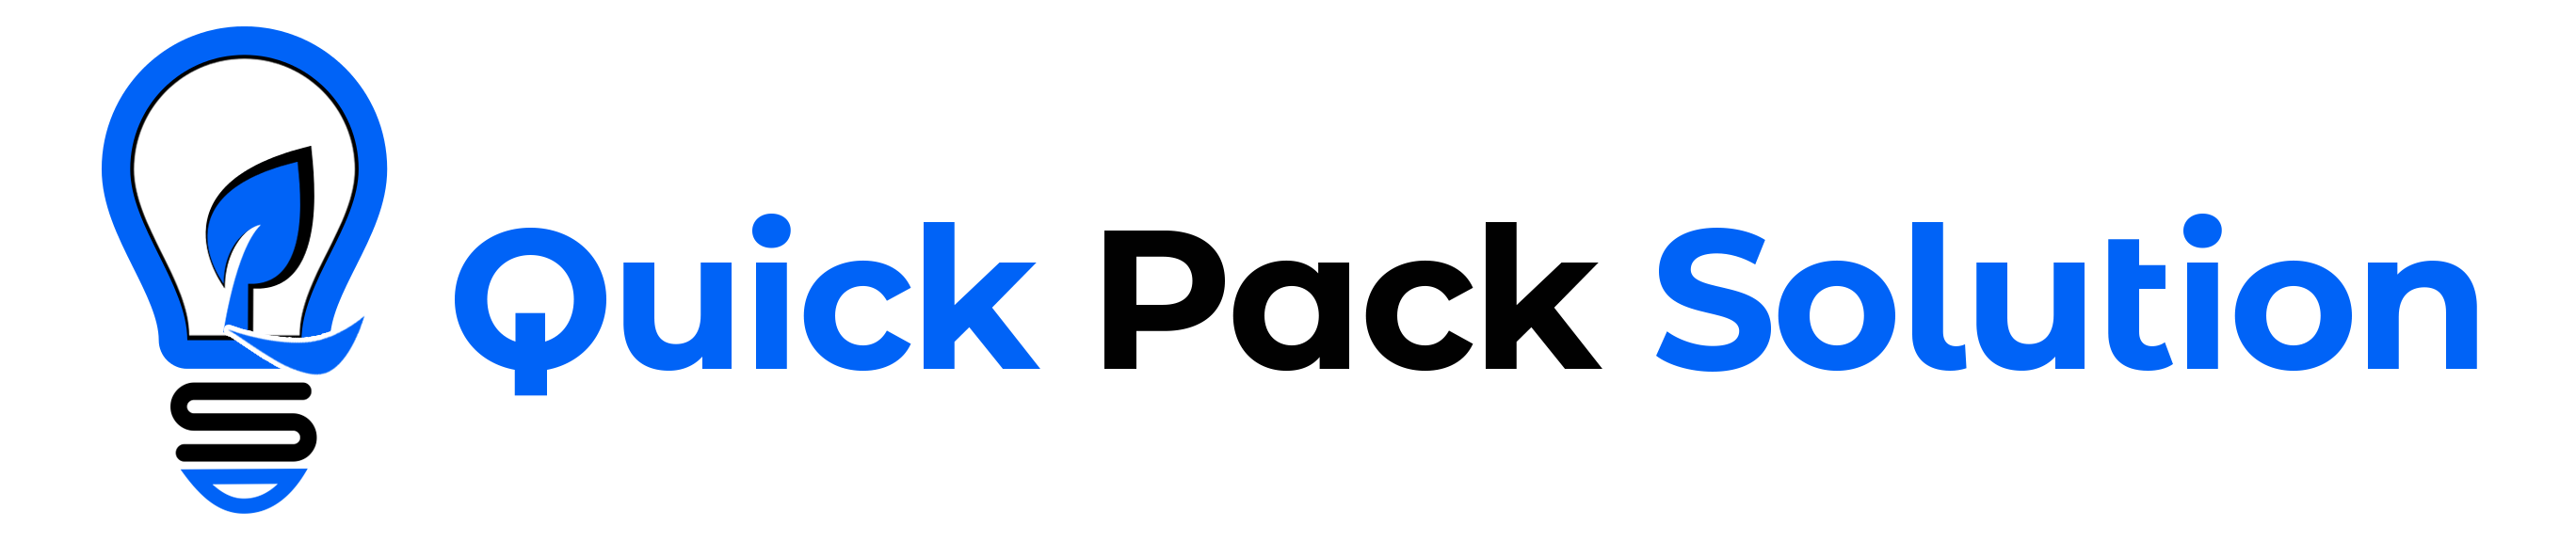 QPS-logo